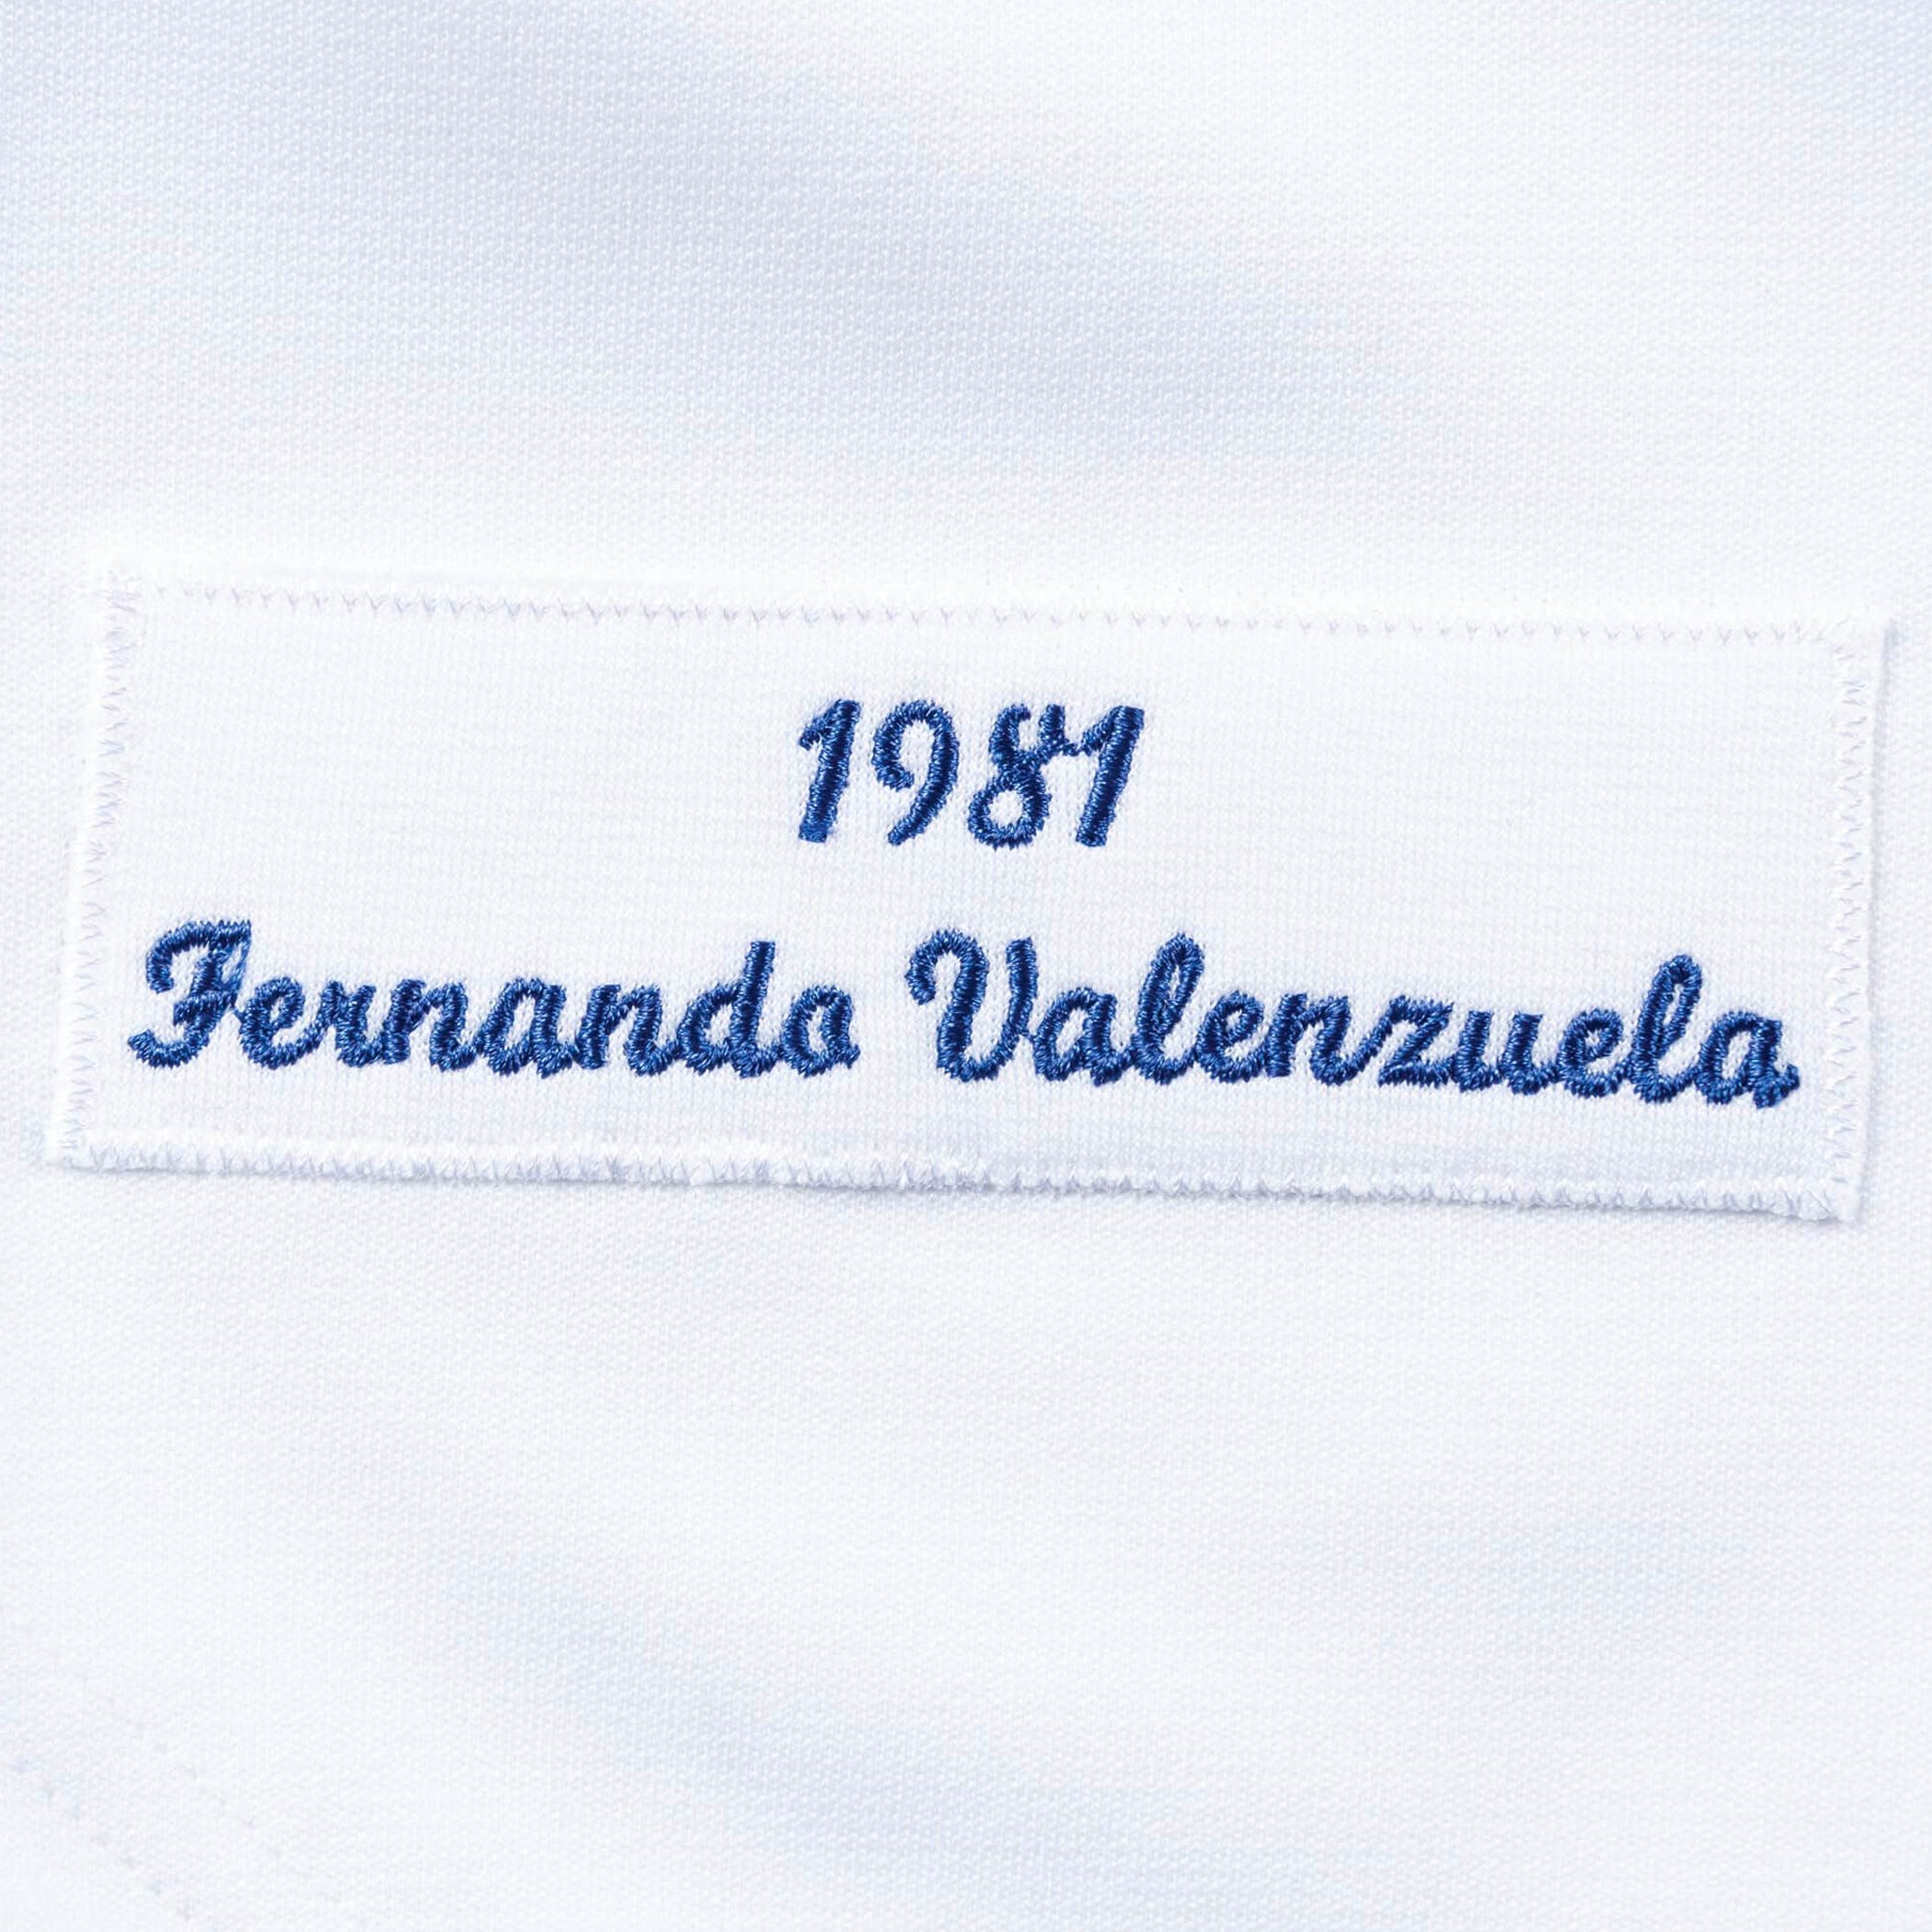 fernando valenzuela jersey 1981